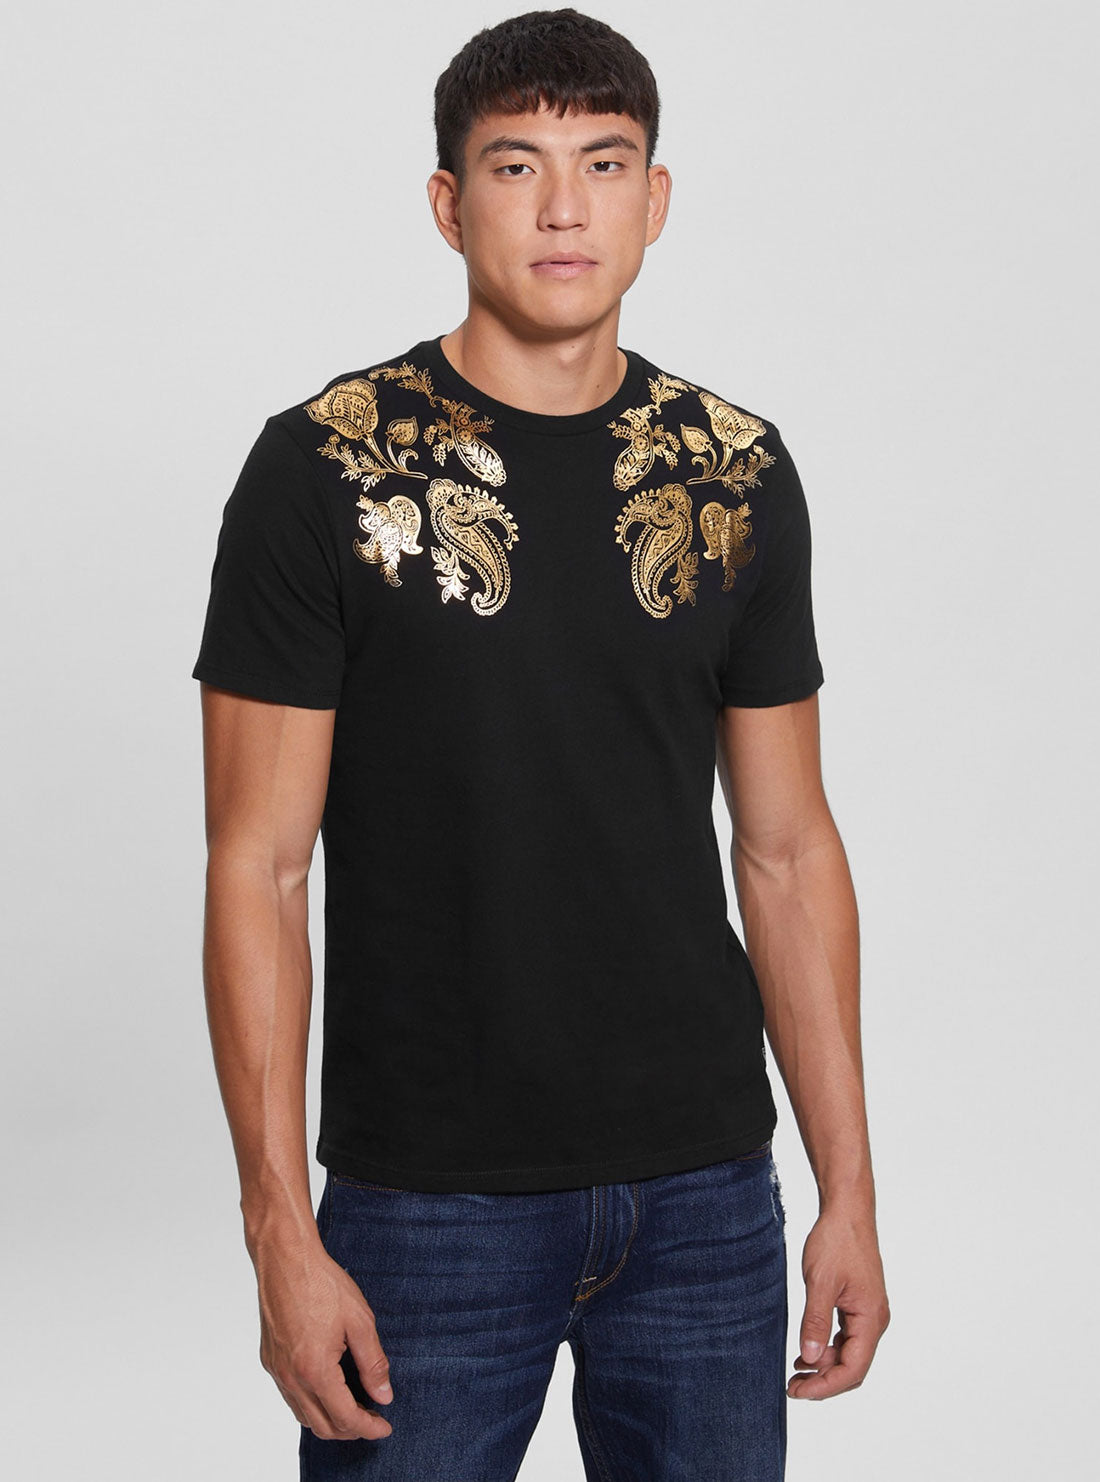 GUESS Men's Eco Black Gold Paisley T-Shirt M3RI73KBDK4 Front View